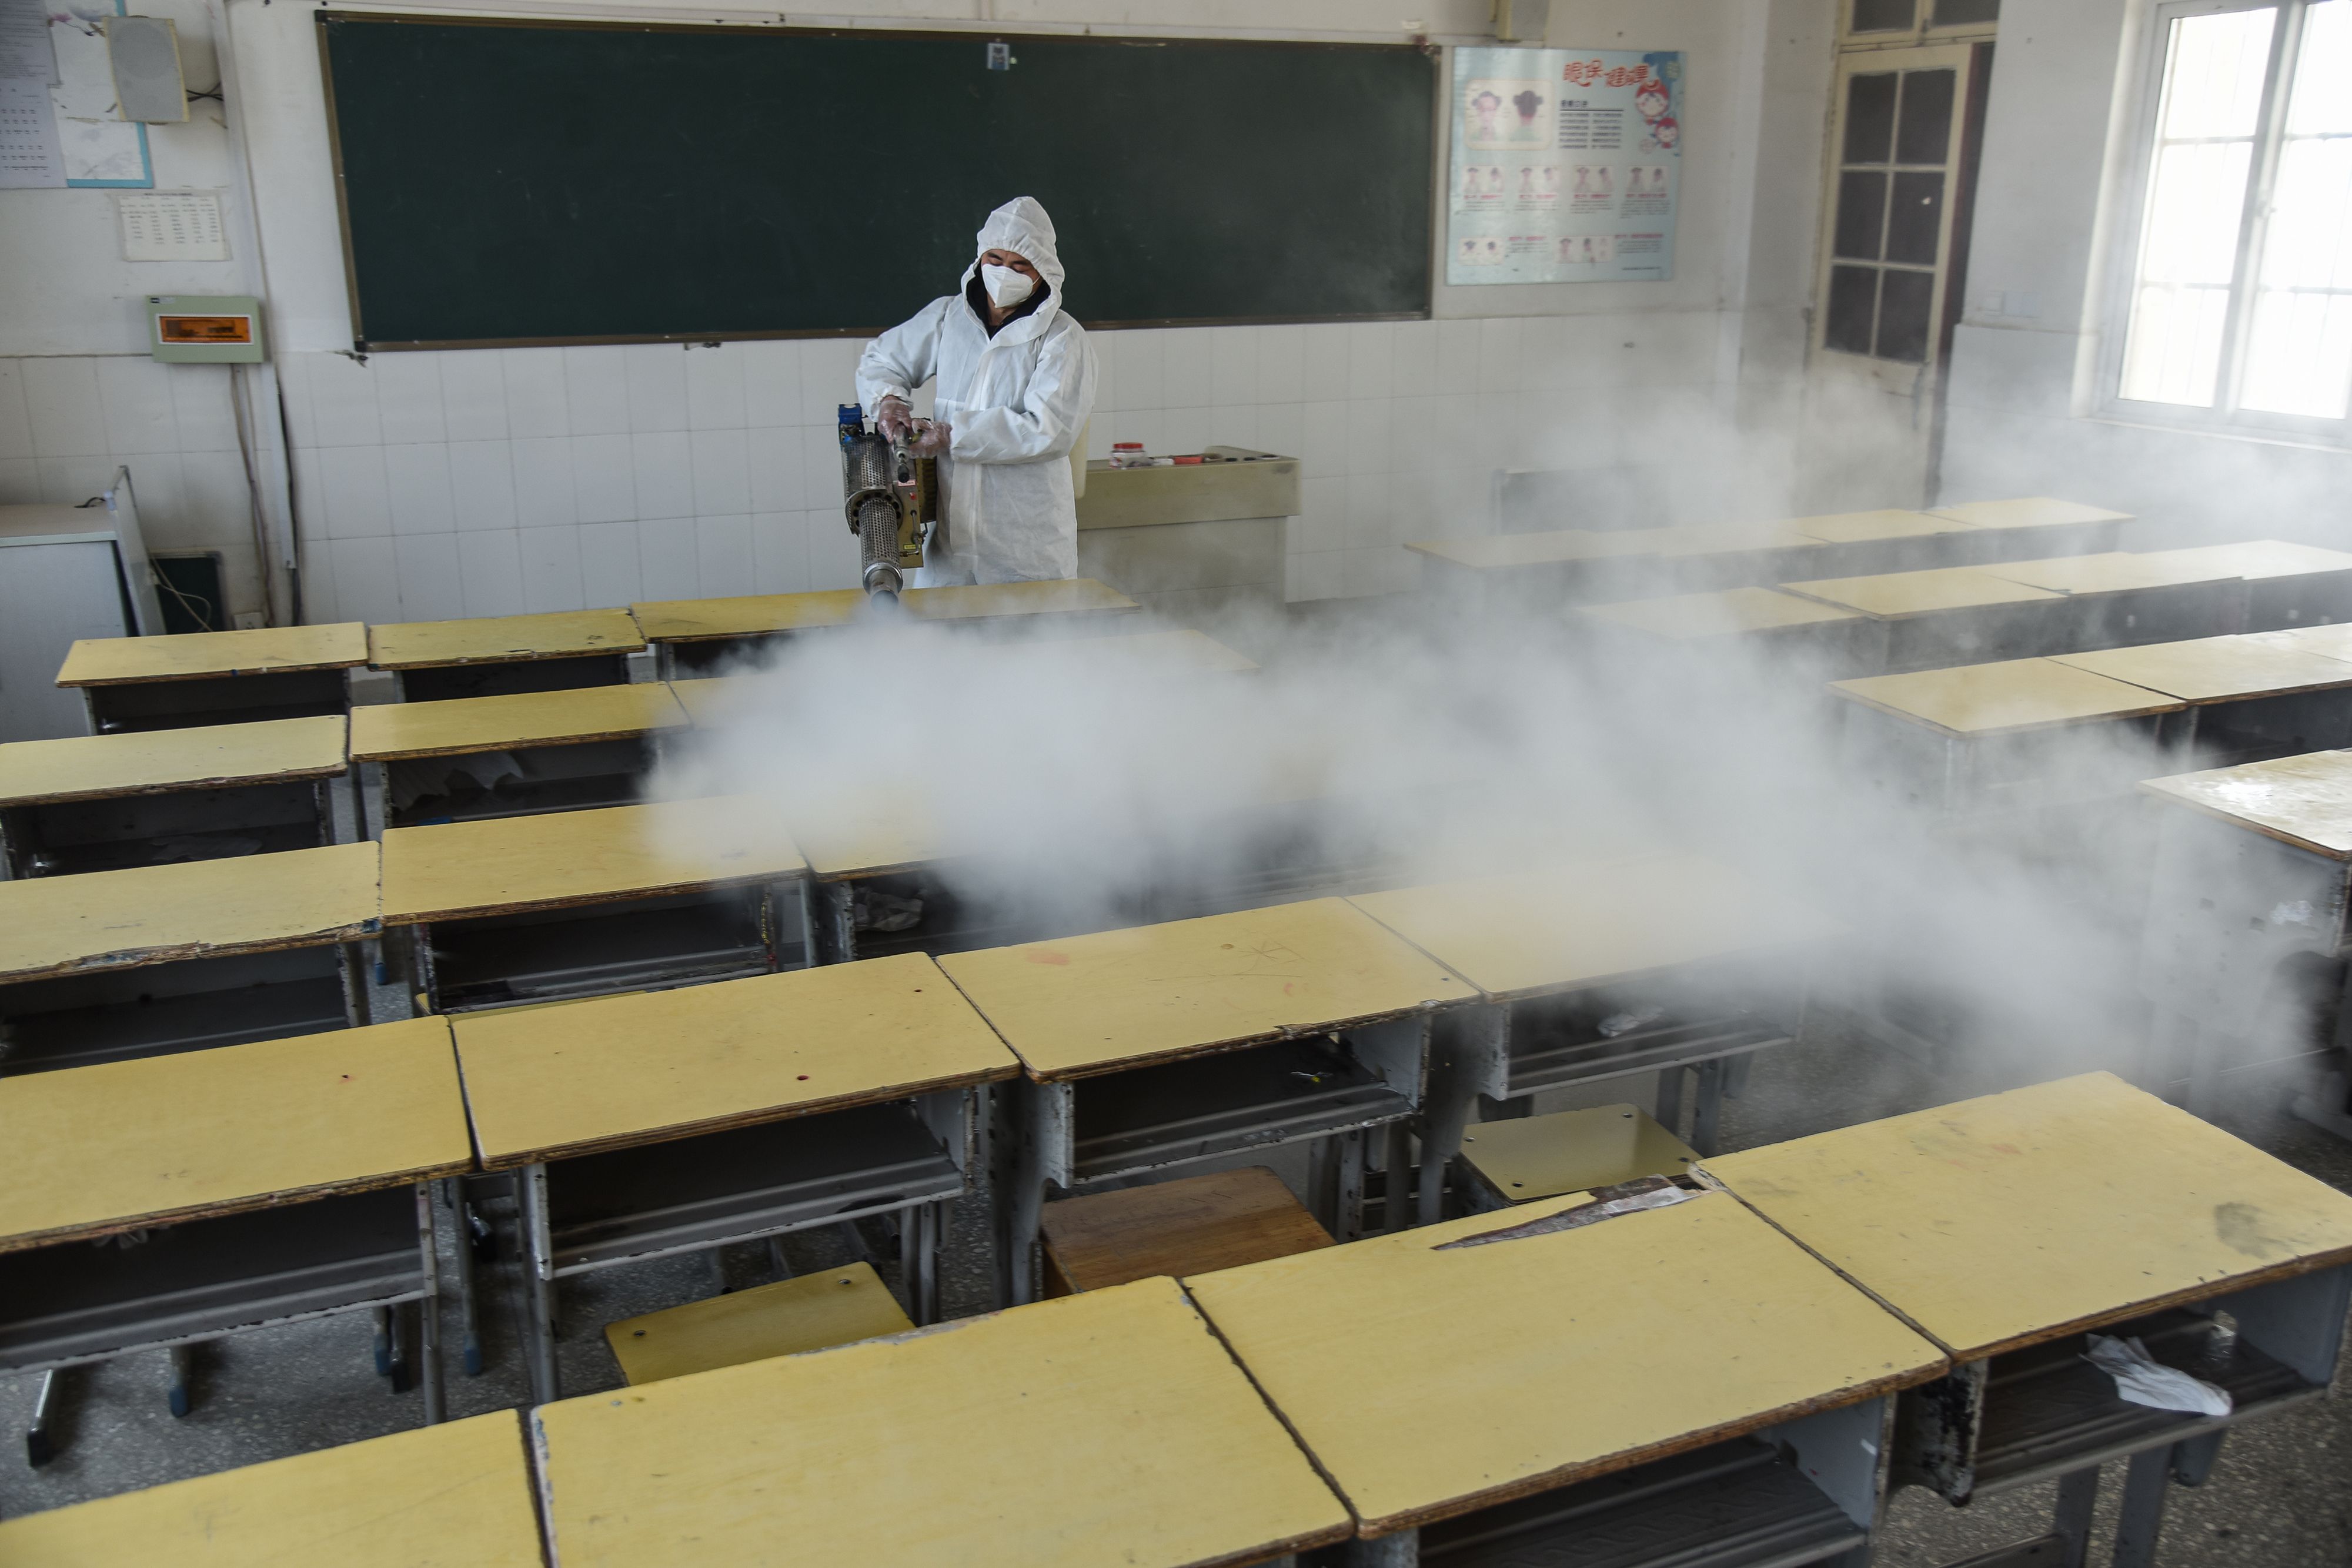 China Halts Some Classes Amid School Covid Cluster, Flu's Return - Bloomberg